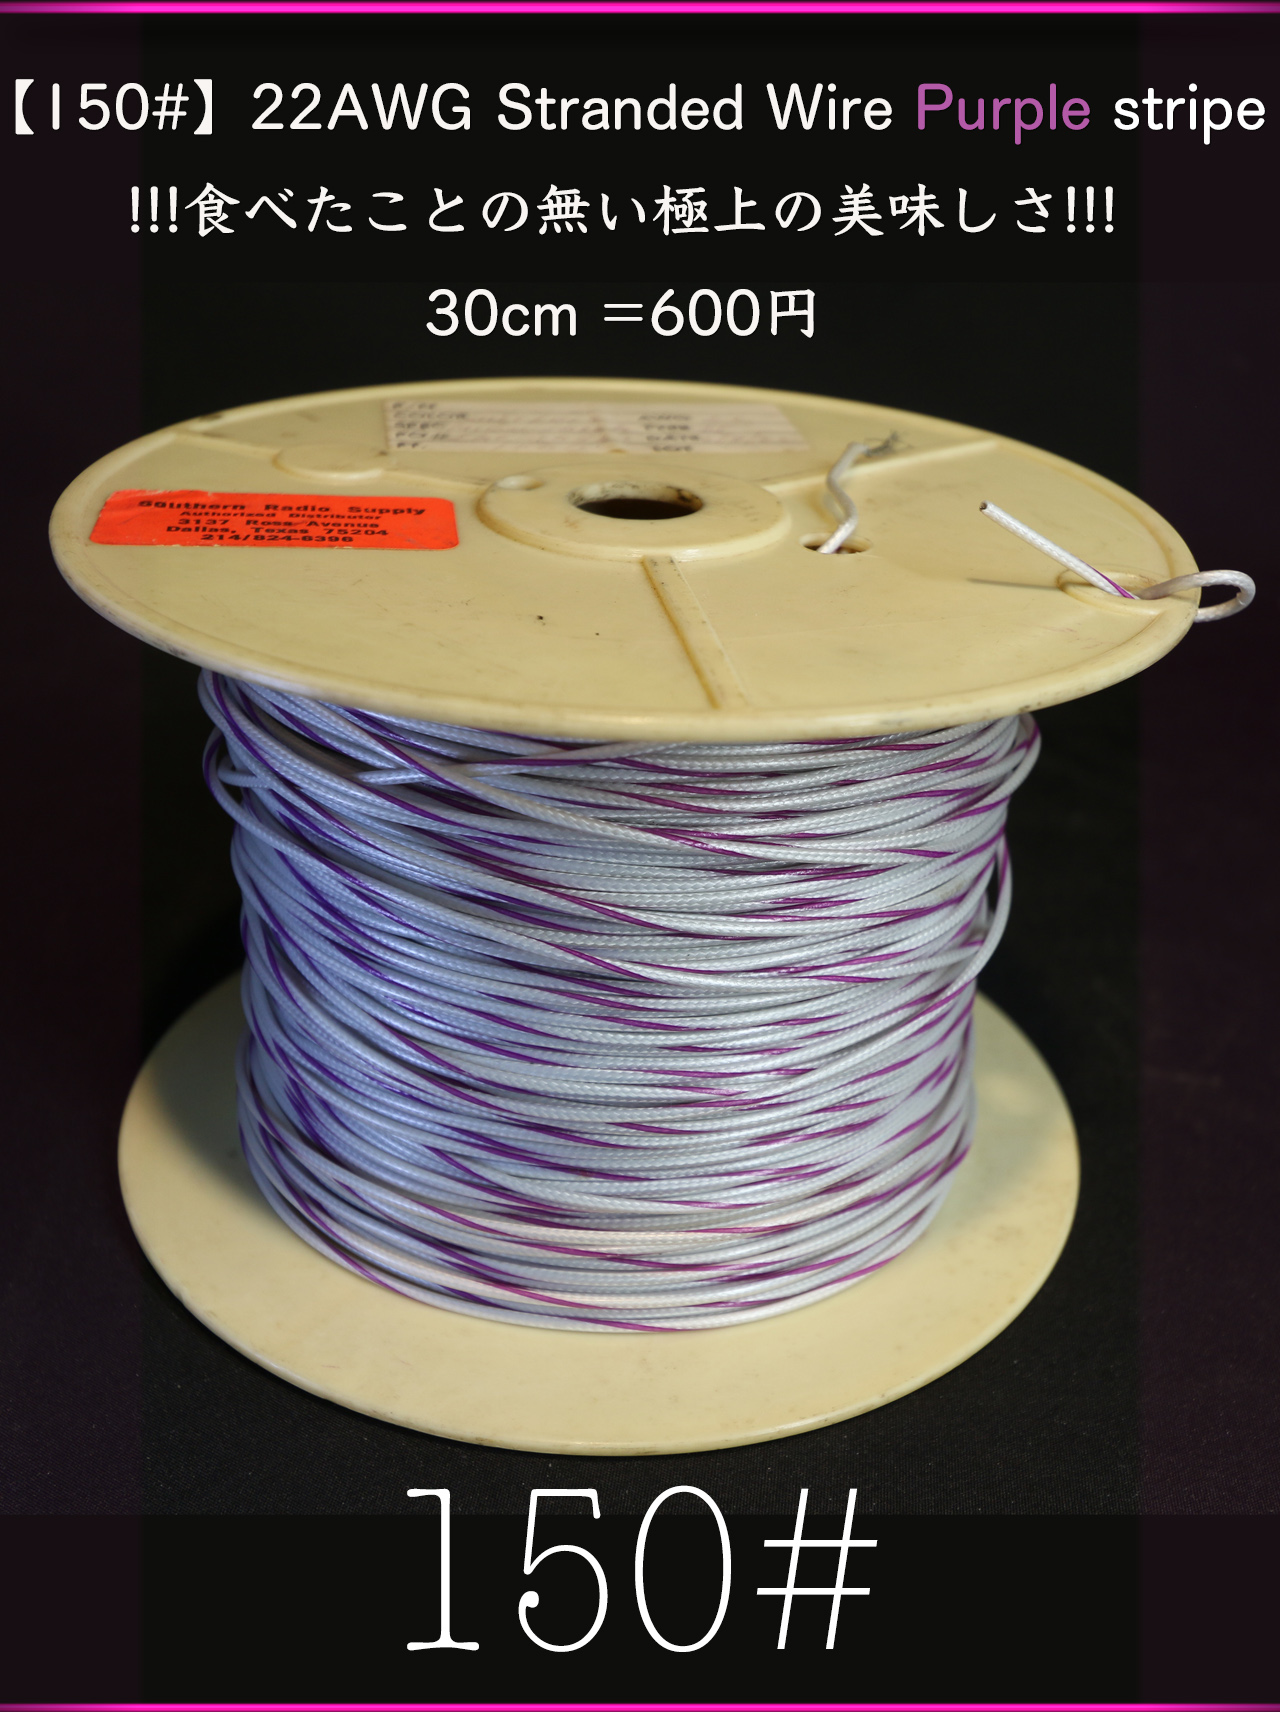 【150#】22AWG Stranded Wire Purple stripe !!!食べたことの無い極上の美味しさ!!! 30cm =600円画像